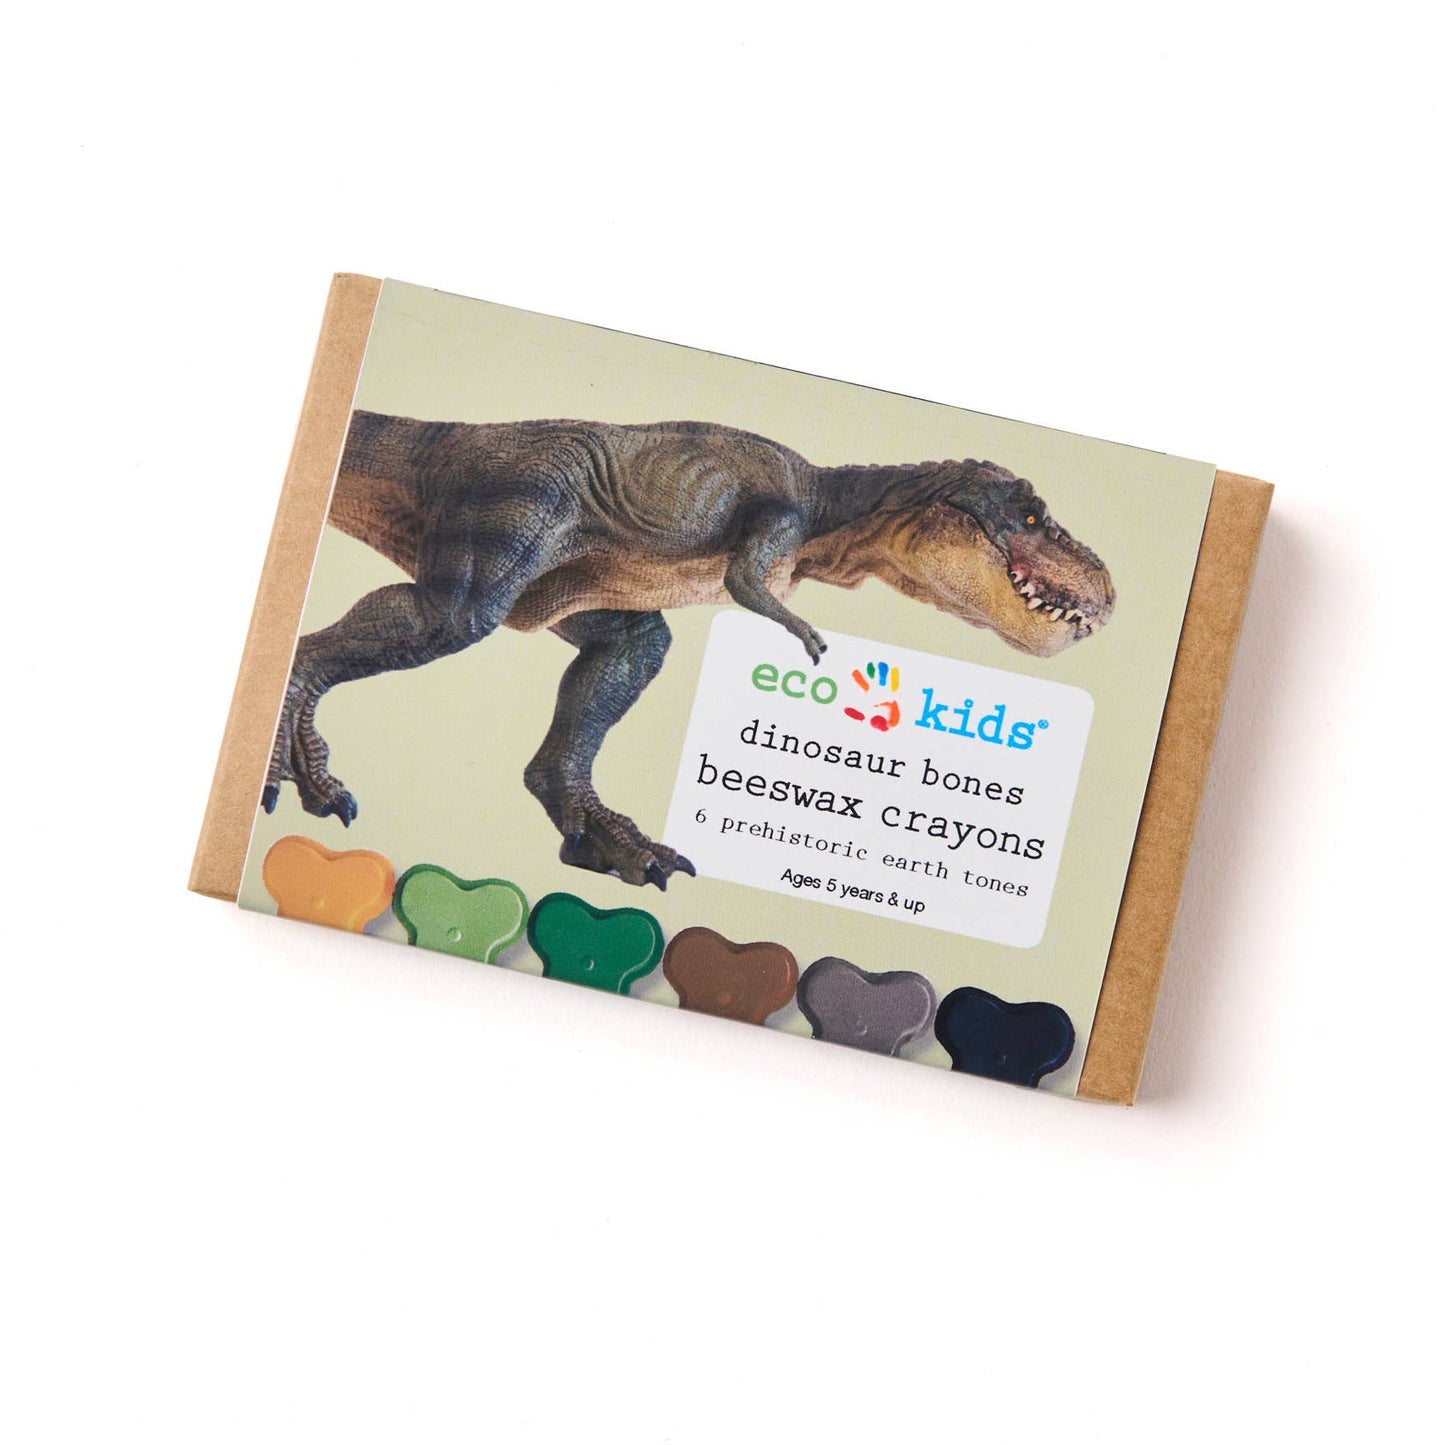 beeswax crayons - dinosaur bones